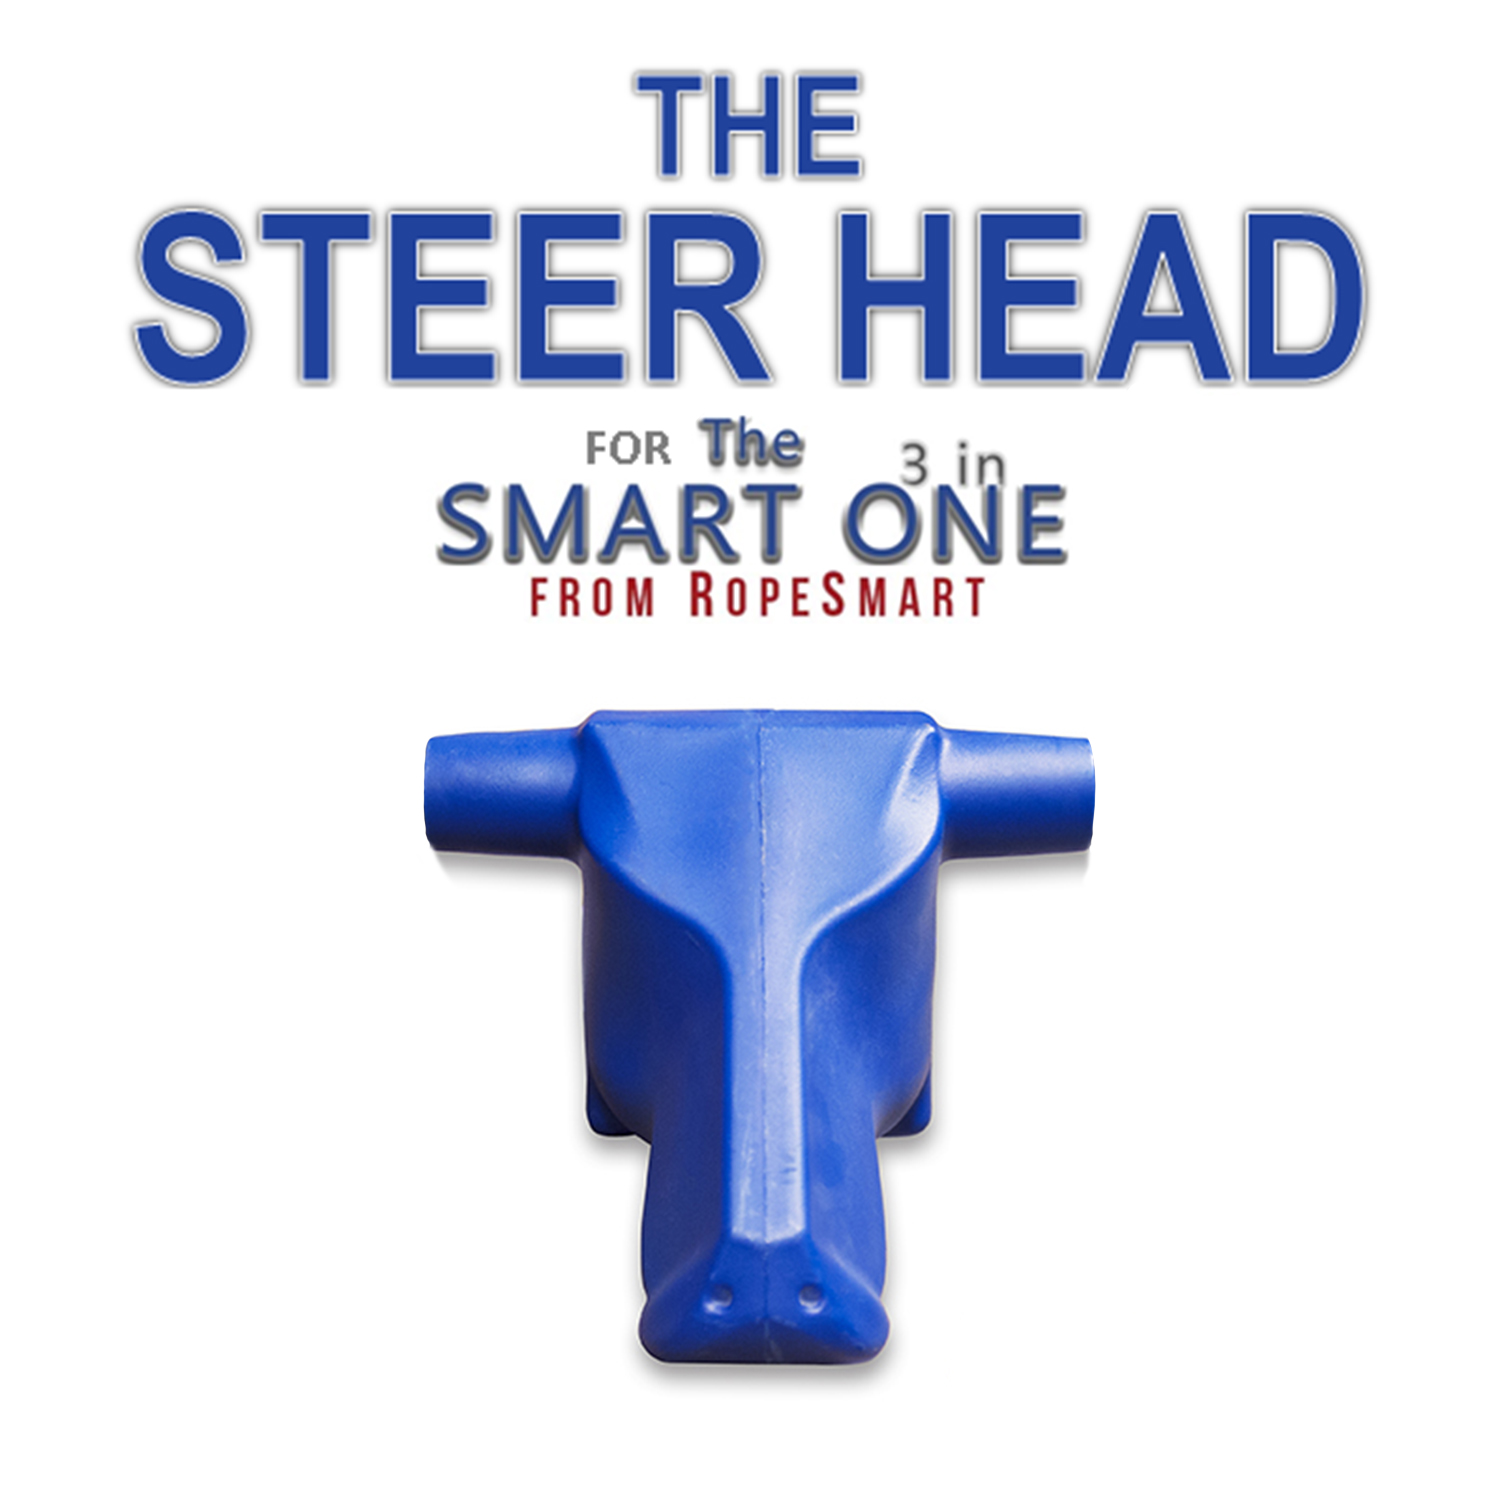 RopeSmart ”The Smart ONE” Steer Head